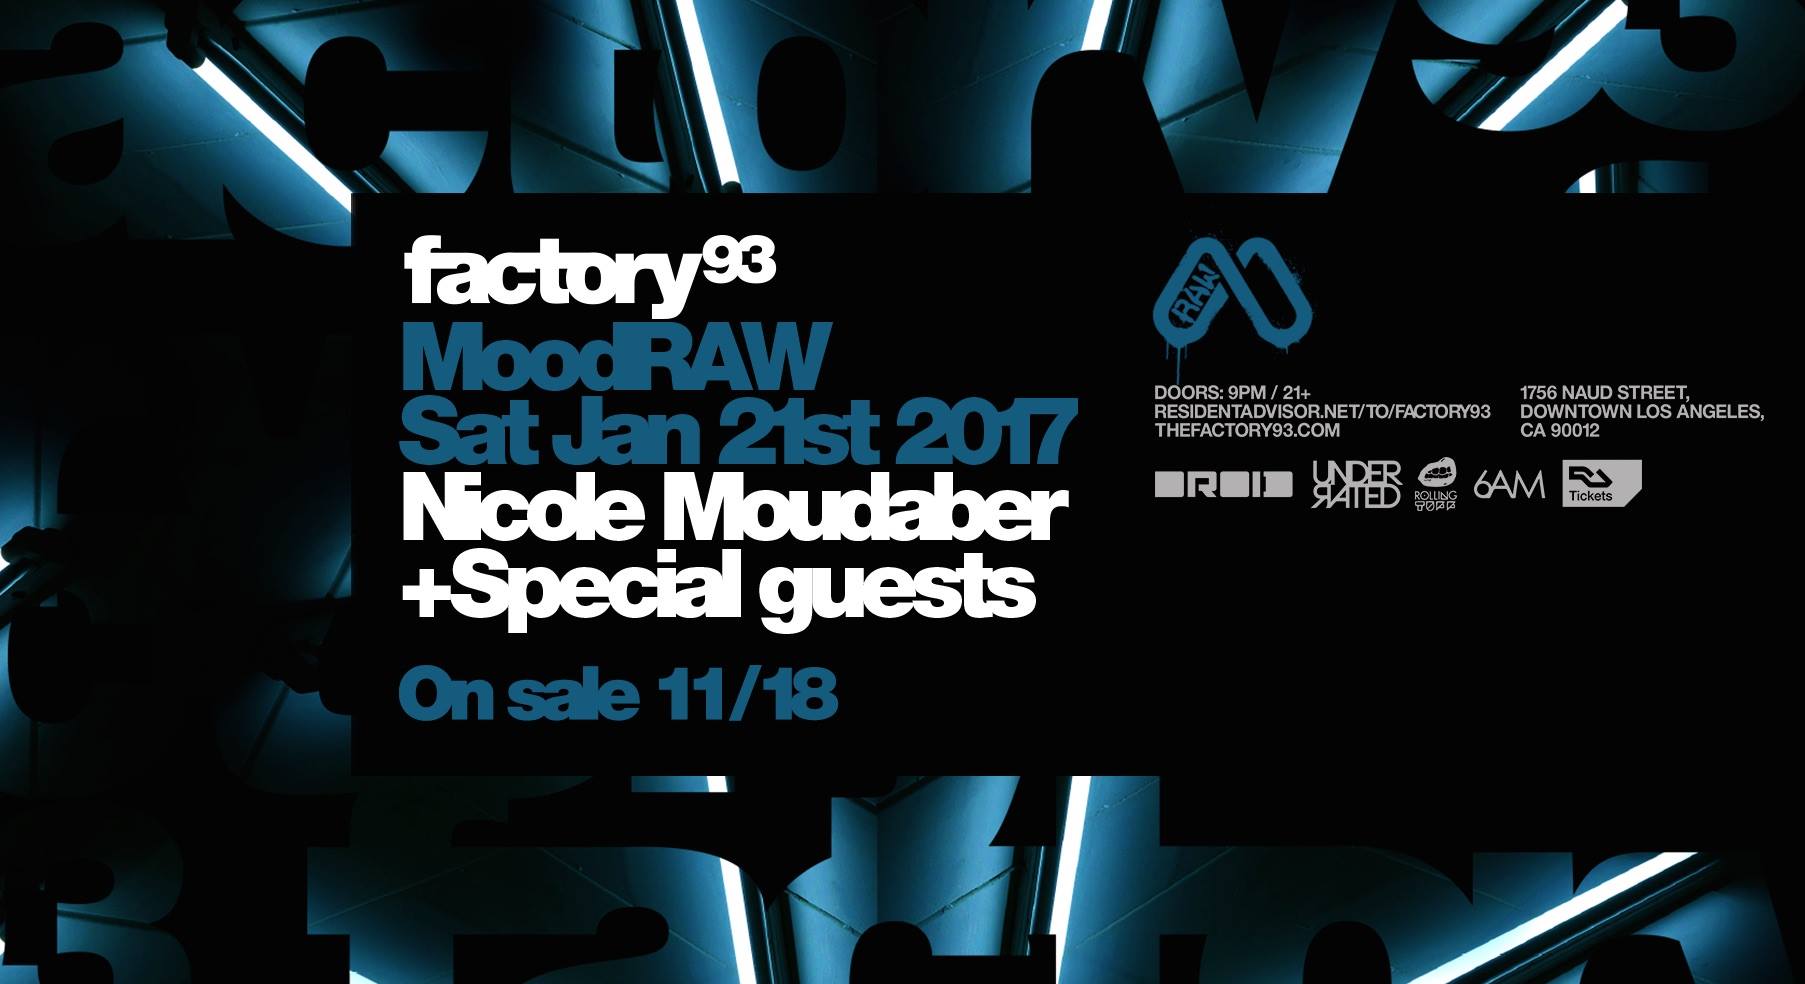 Factory 93 MoodRAW